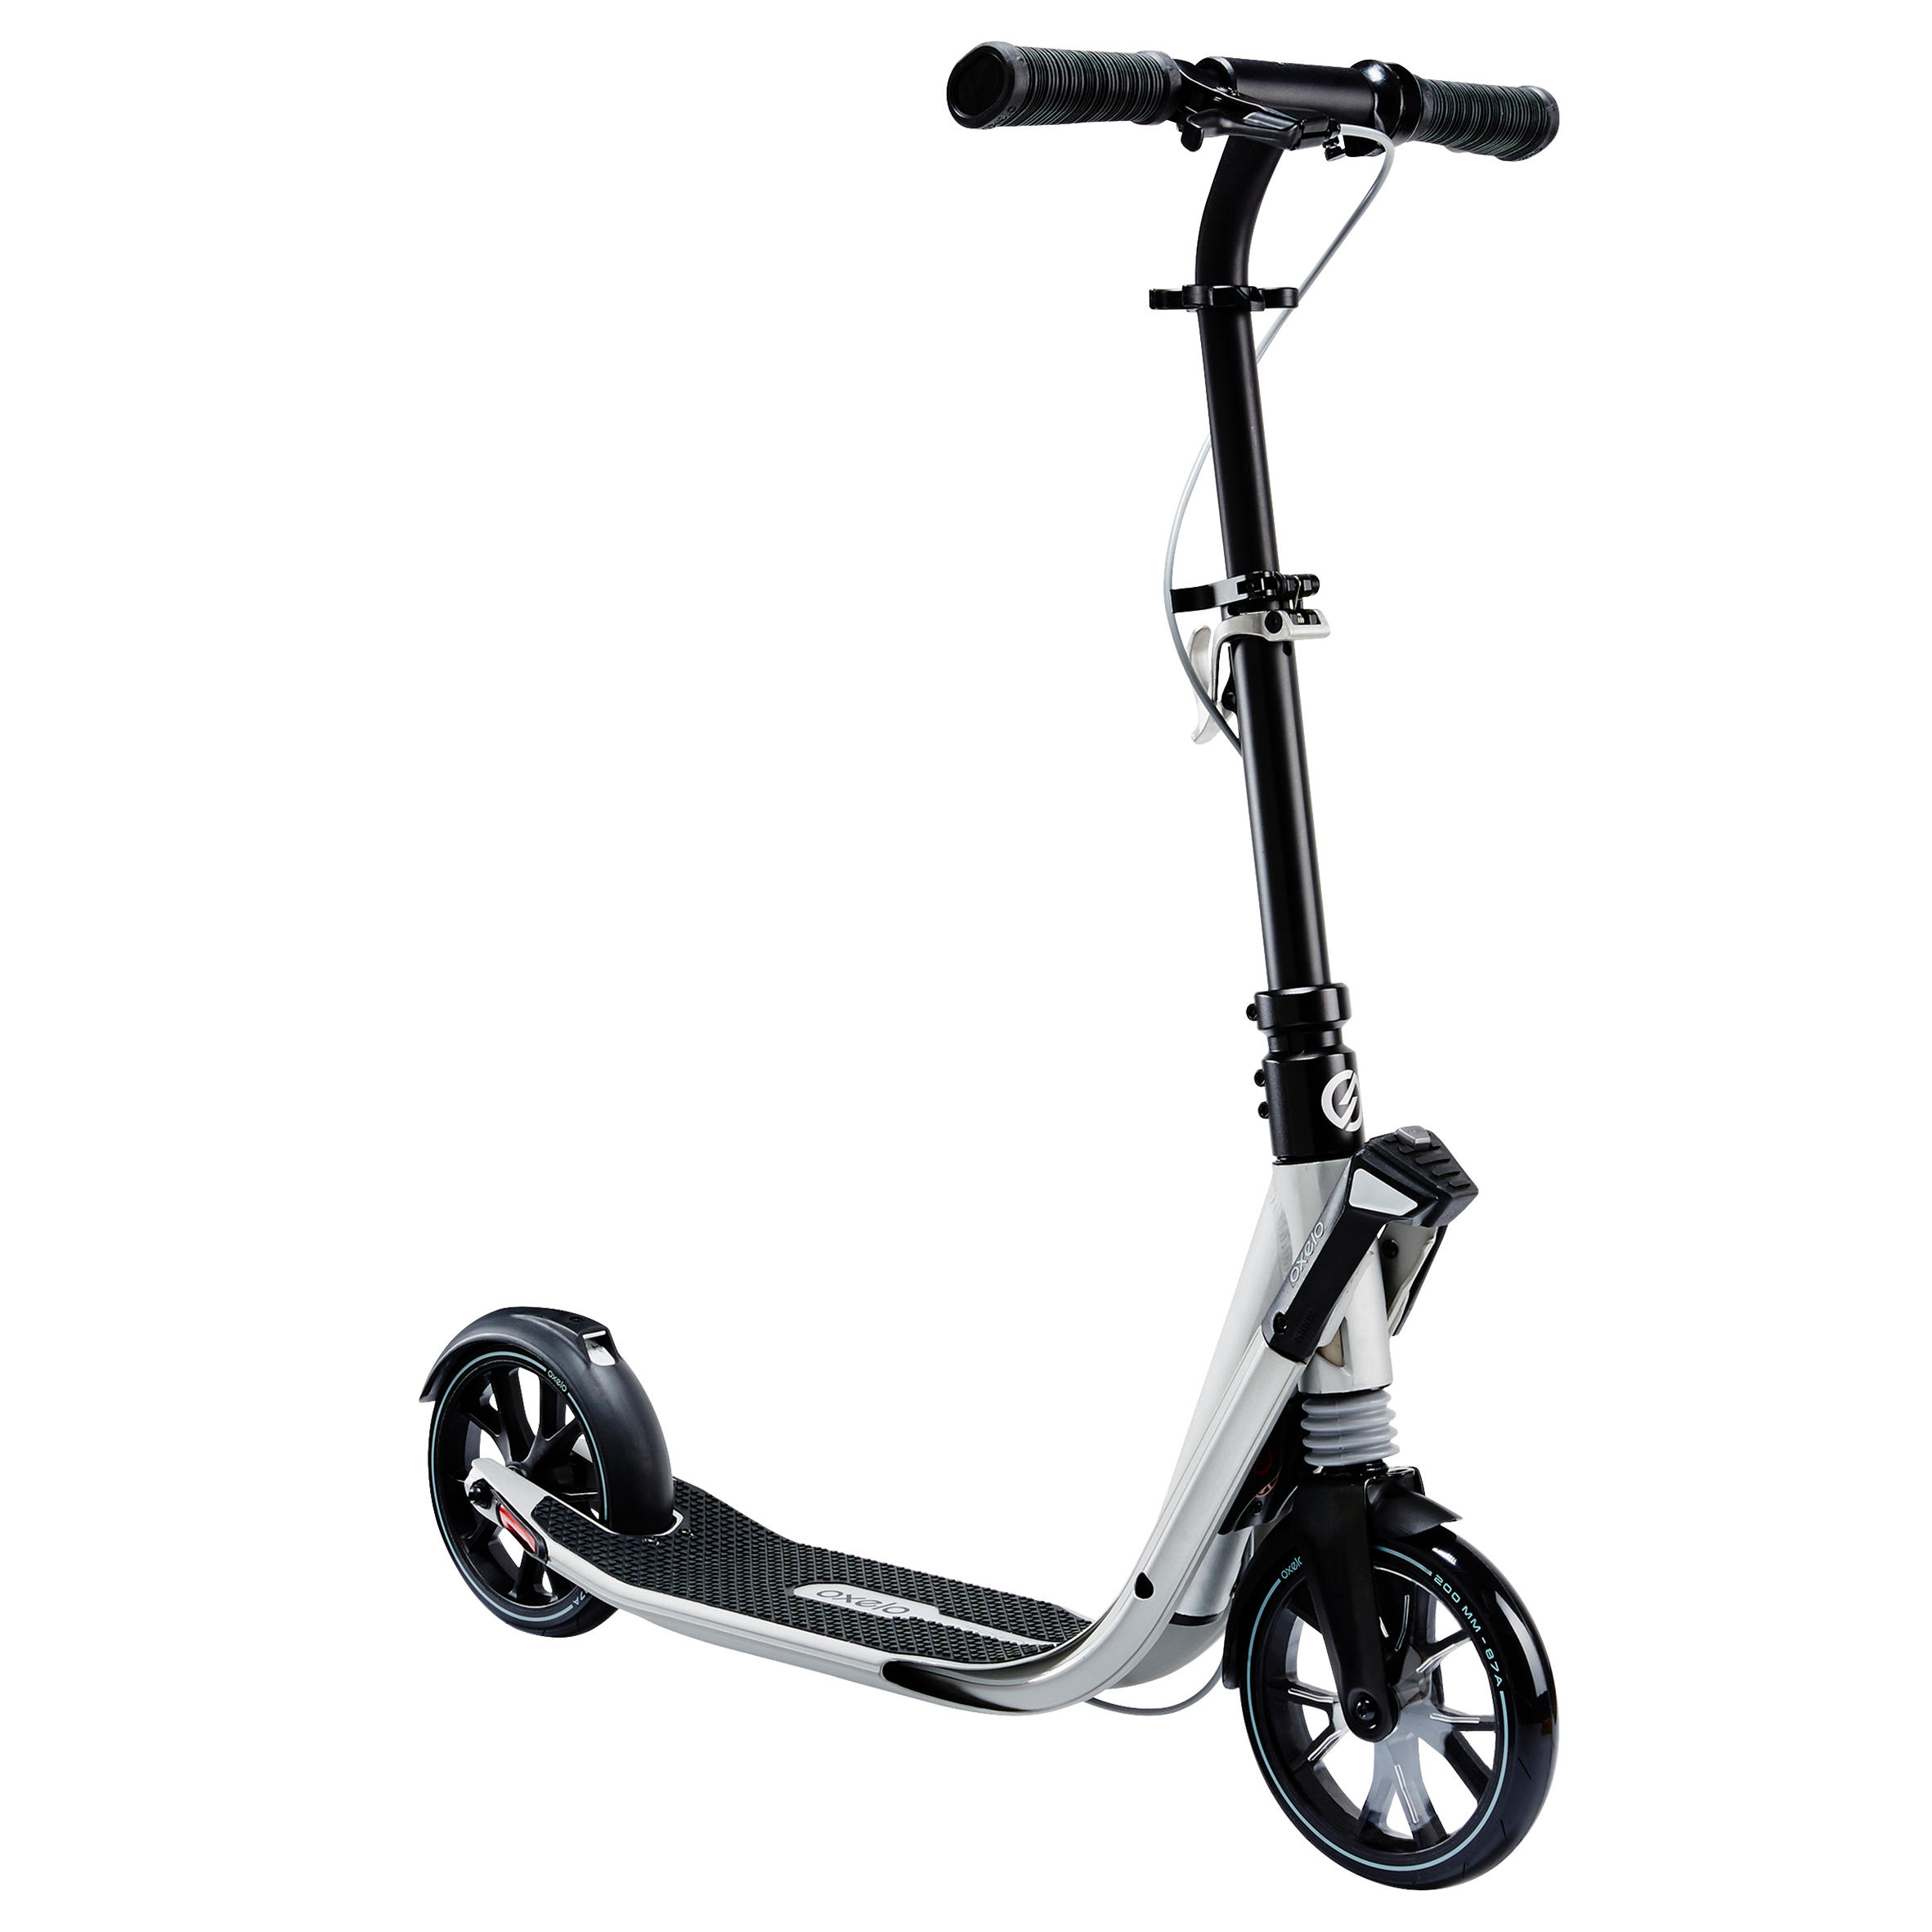 decathlon adult scooter